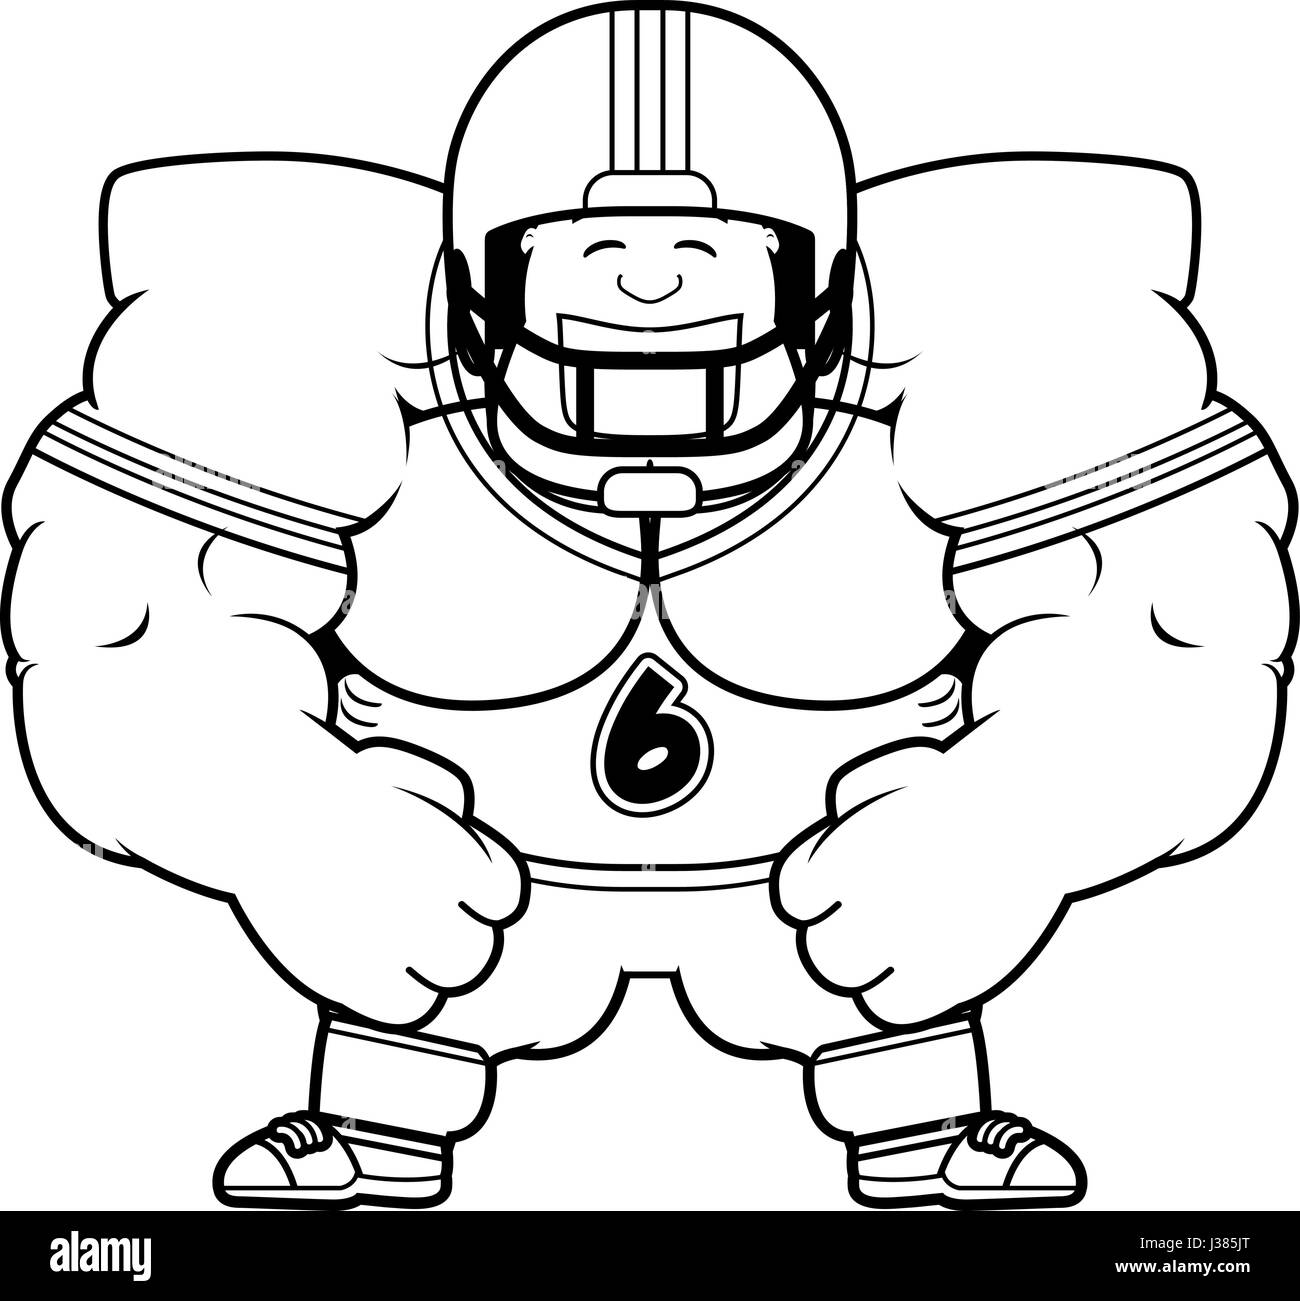 A cartoon illustration of a muscular football player flexing. Stock Vector